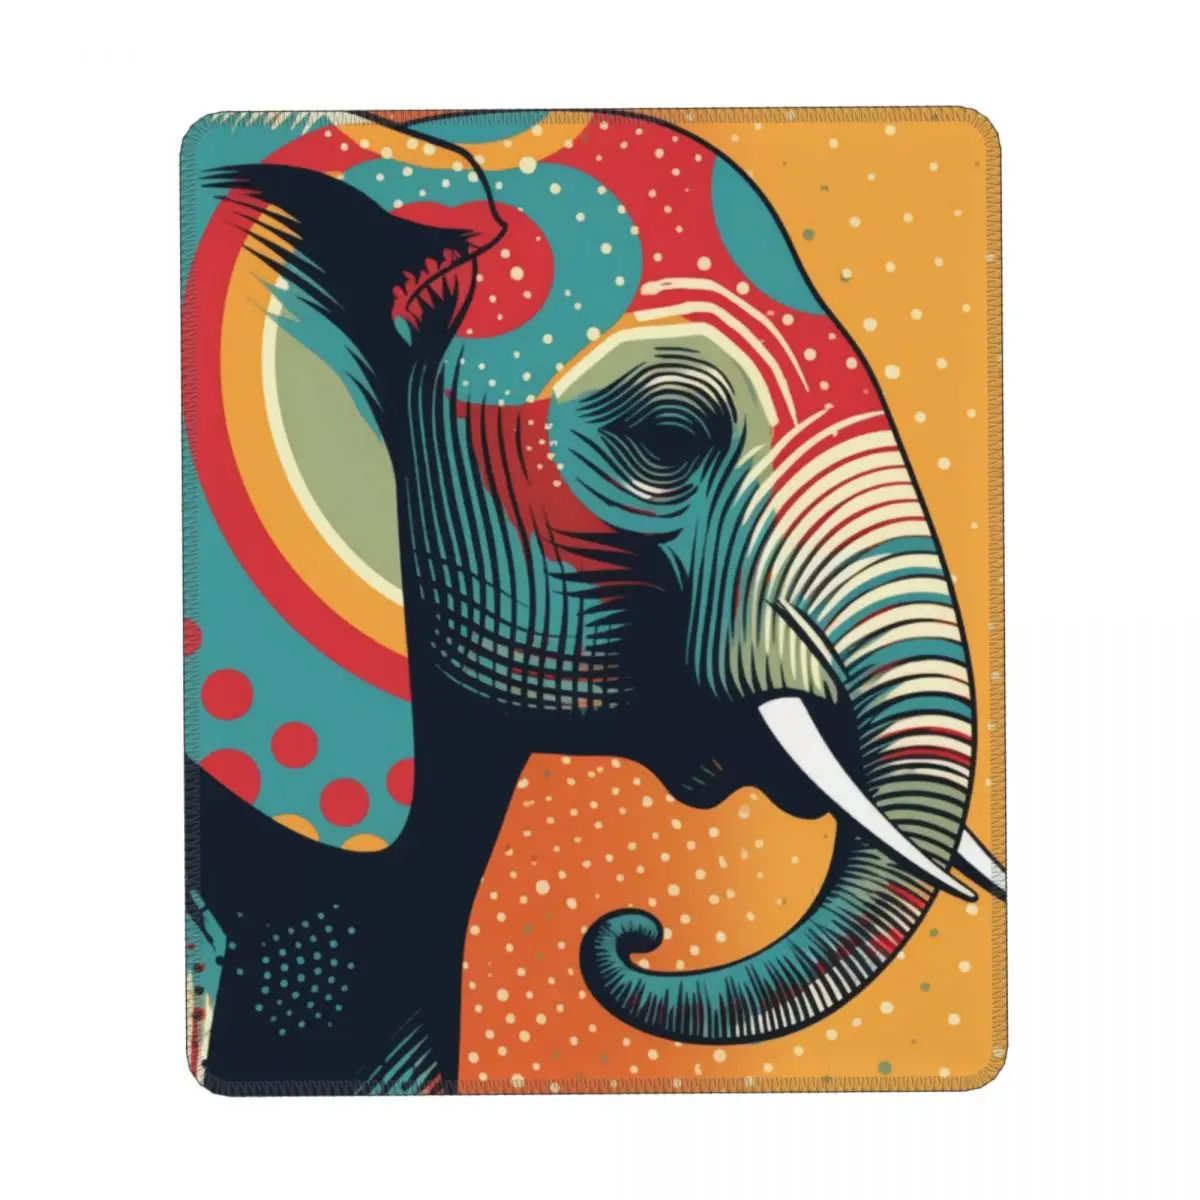 

Elephant Vertical Print Mouse Pad Multicolored Retro Rubber Desktop Mousepad Anti Fatigue Soft Kawaii Mouse Pads